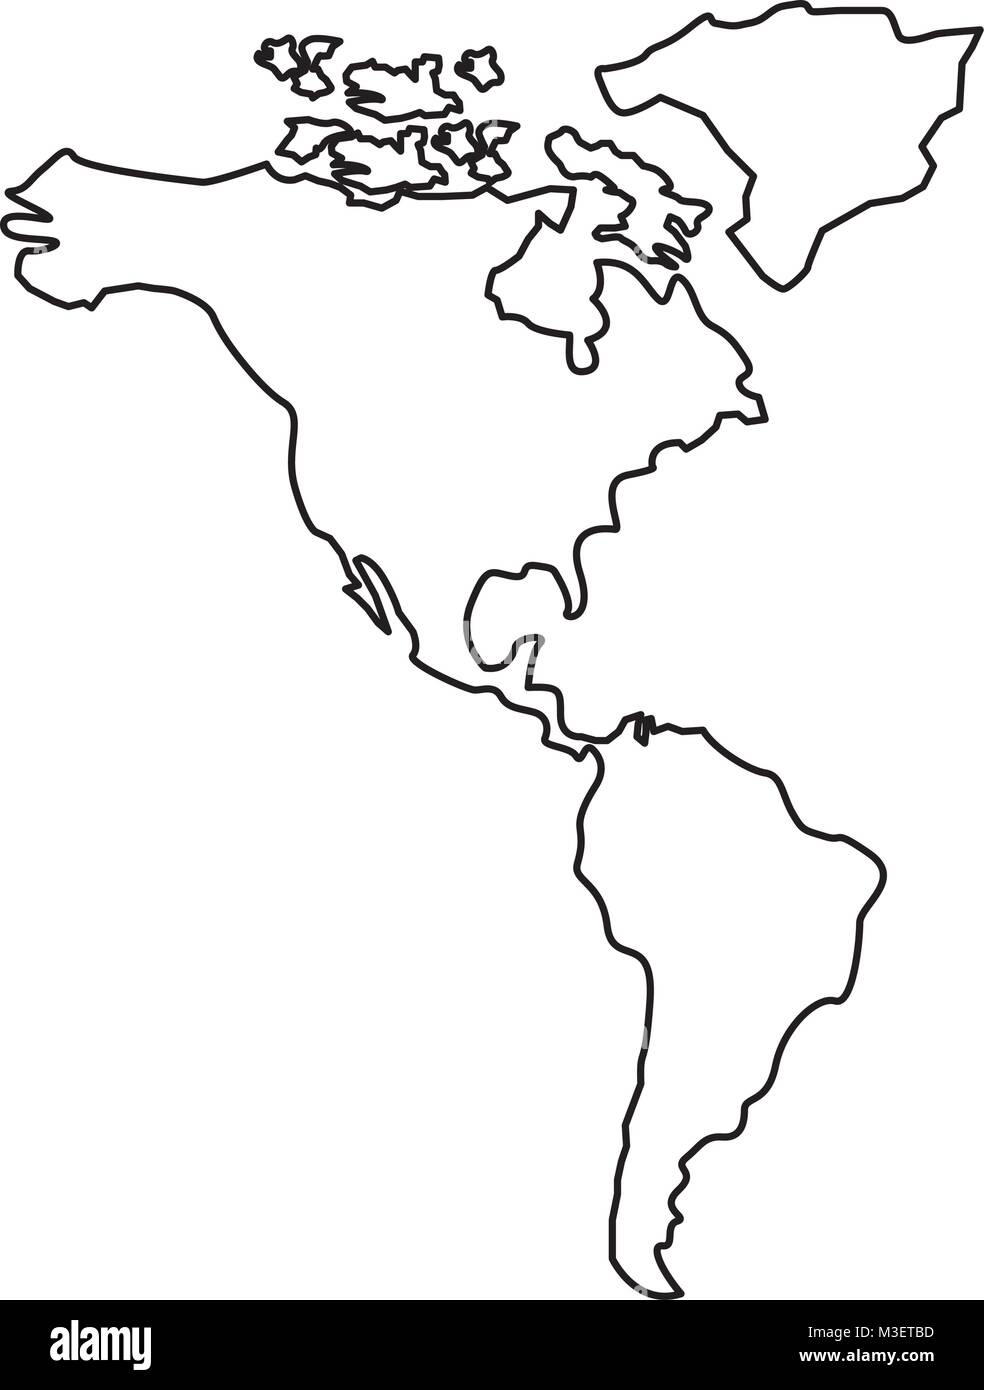 Dibujos De Mapa Continente Americano Para Colorear Vsun 2881